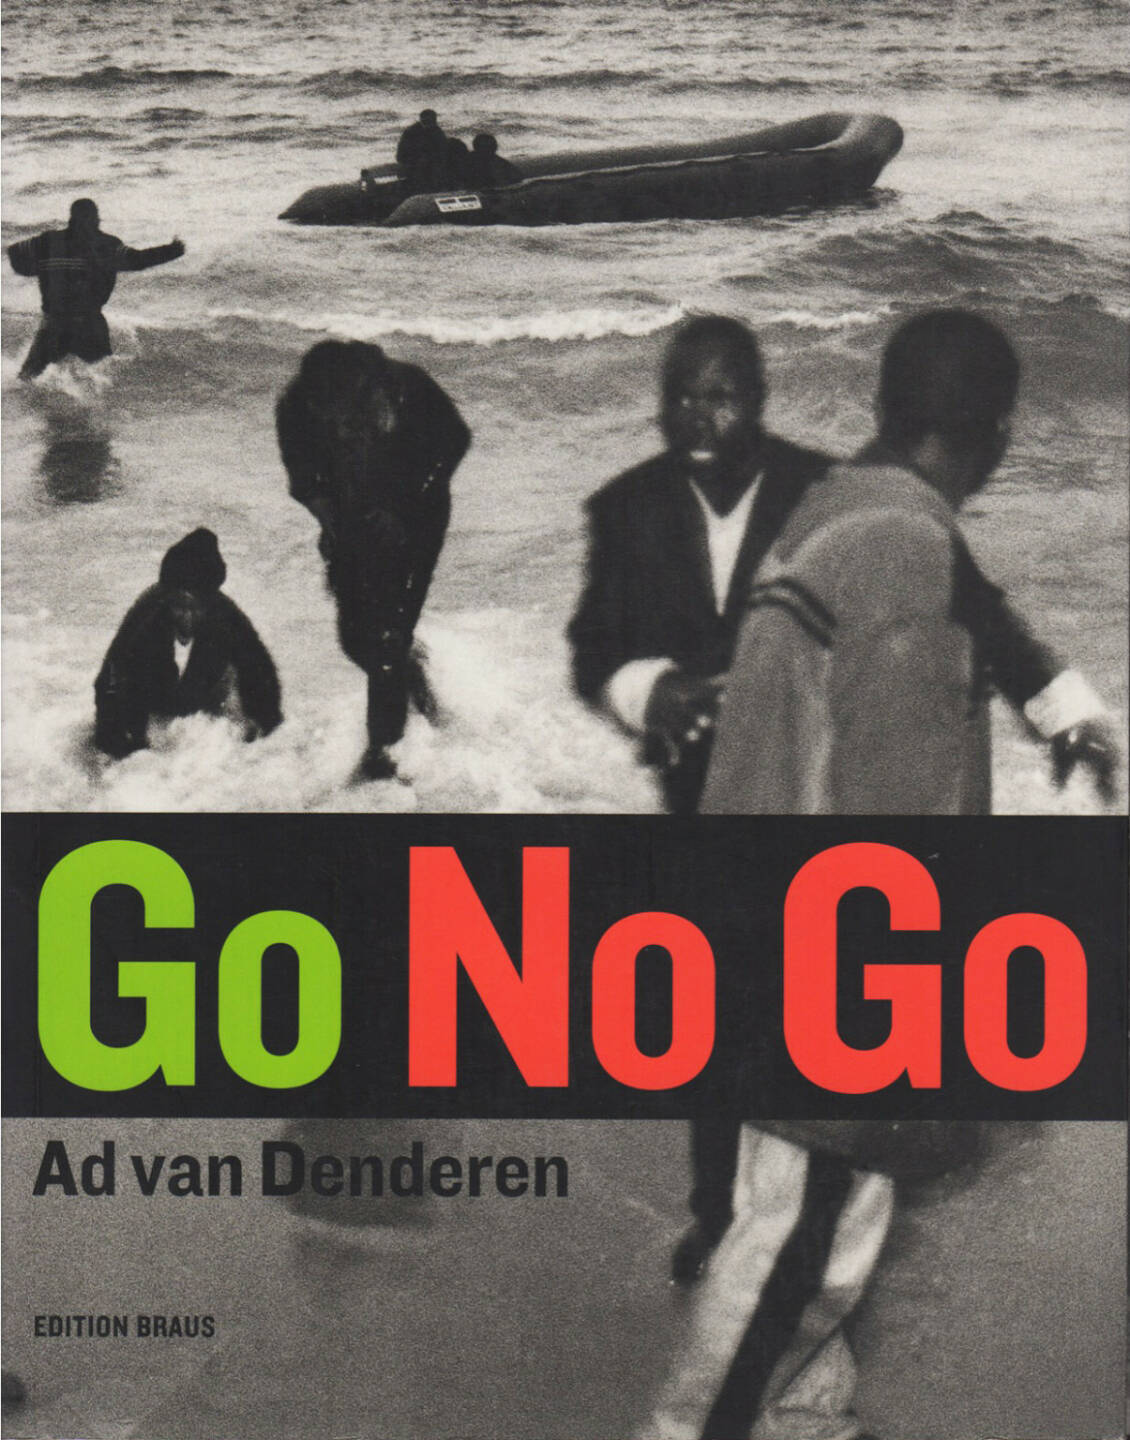 Ad Van Denderen - Go No Go, Braus Edition Im Wachter 2003, Cover - http://josefchladek.com/book/ad_van_denderen_-_go_no_go